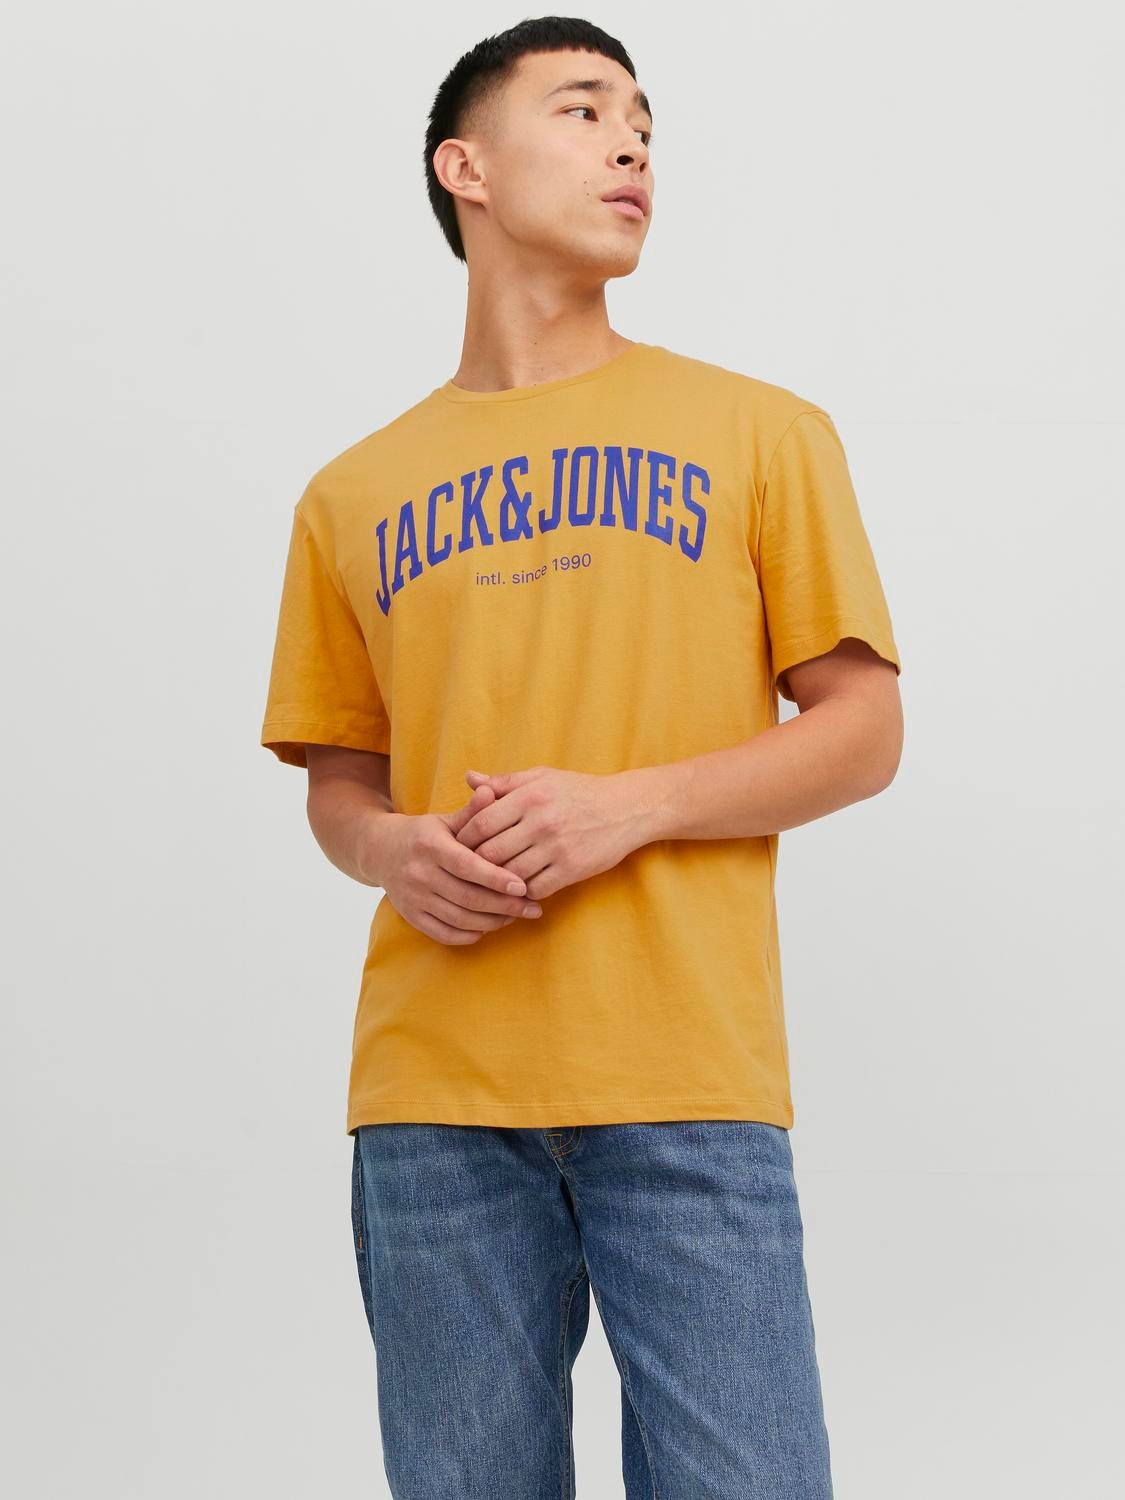 Jack & Jones Logo Crew neck T-shirt -Honey Gold - 12236514